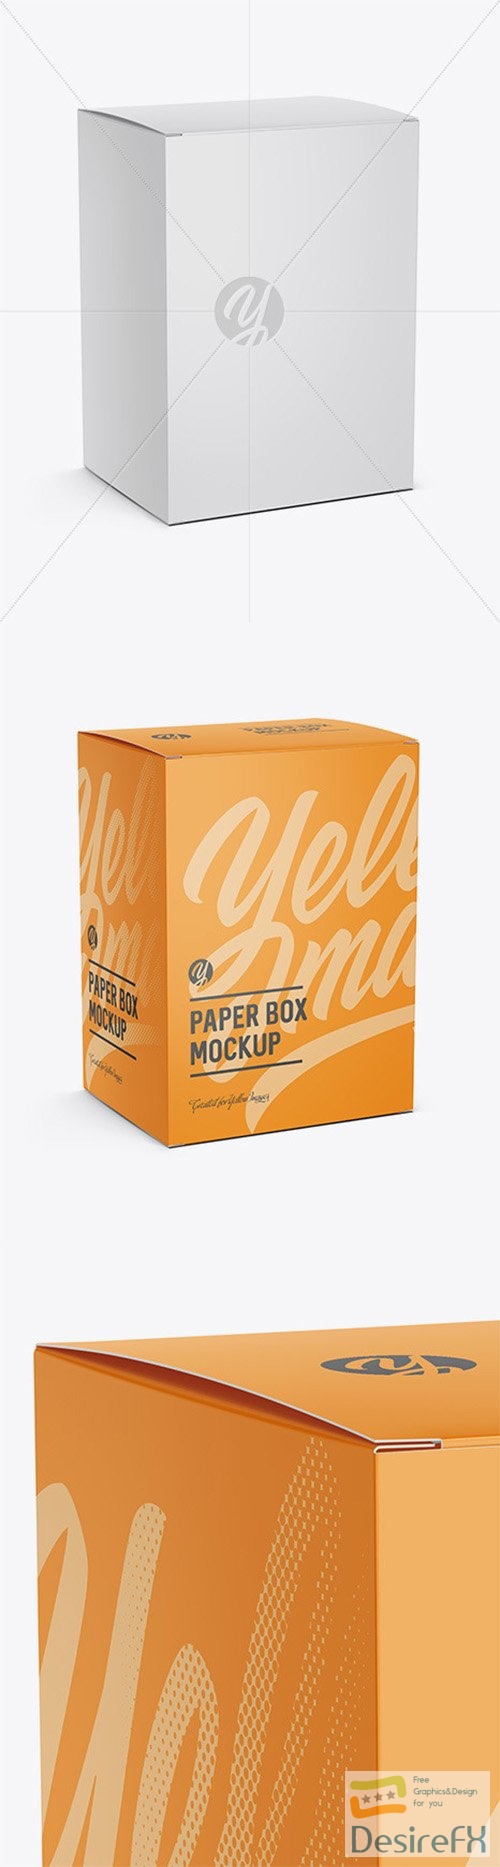 Paper Box Mockup - Halfside View 80256 TIF